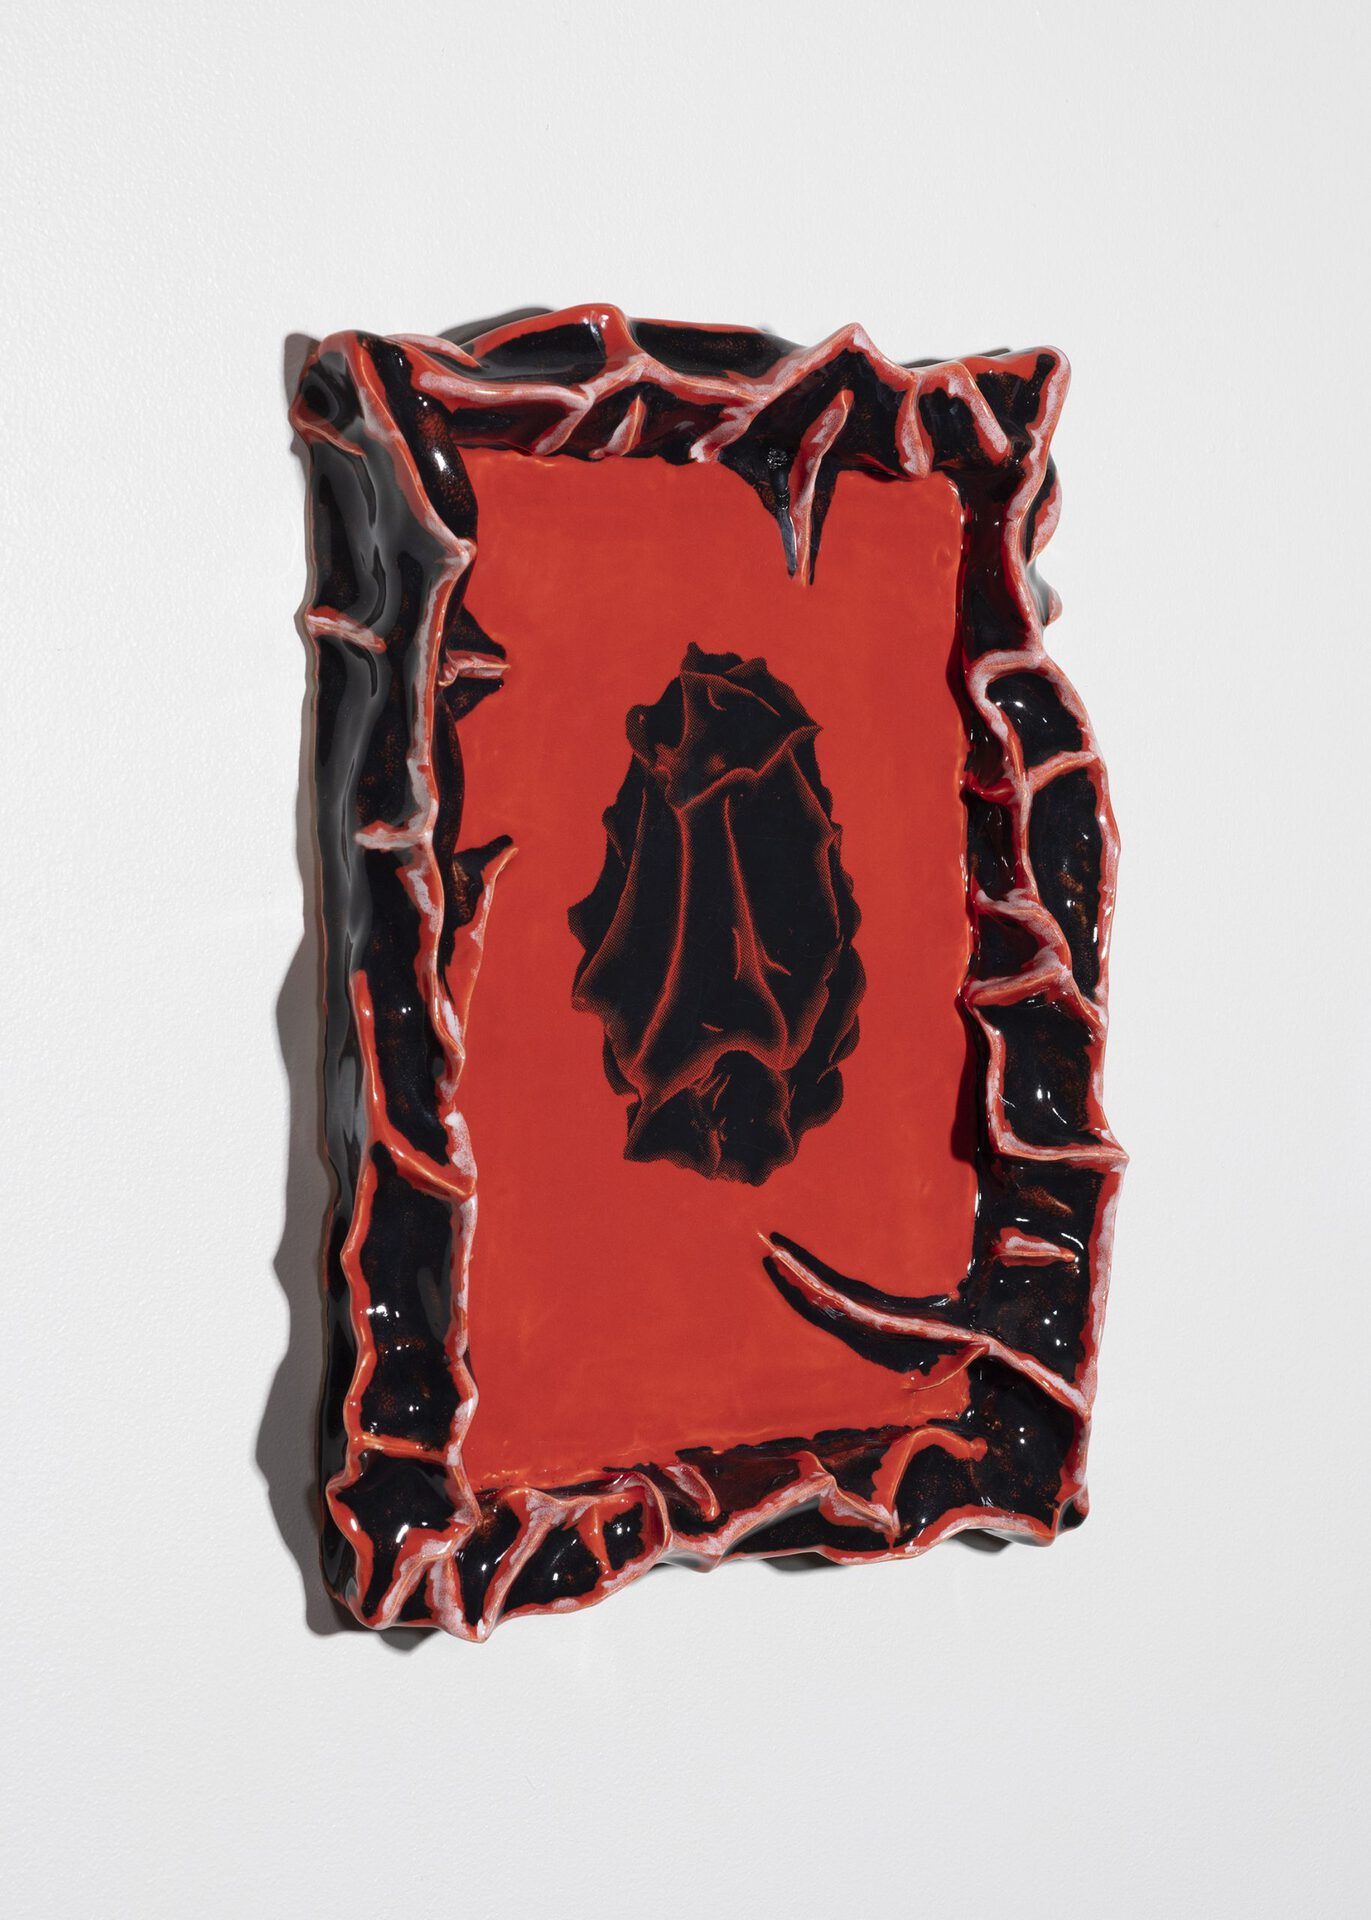 June Fischer, Reticulidia Halgerda, 2020, Silkscreen on porcelain, 21 x 29.7 cm